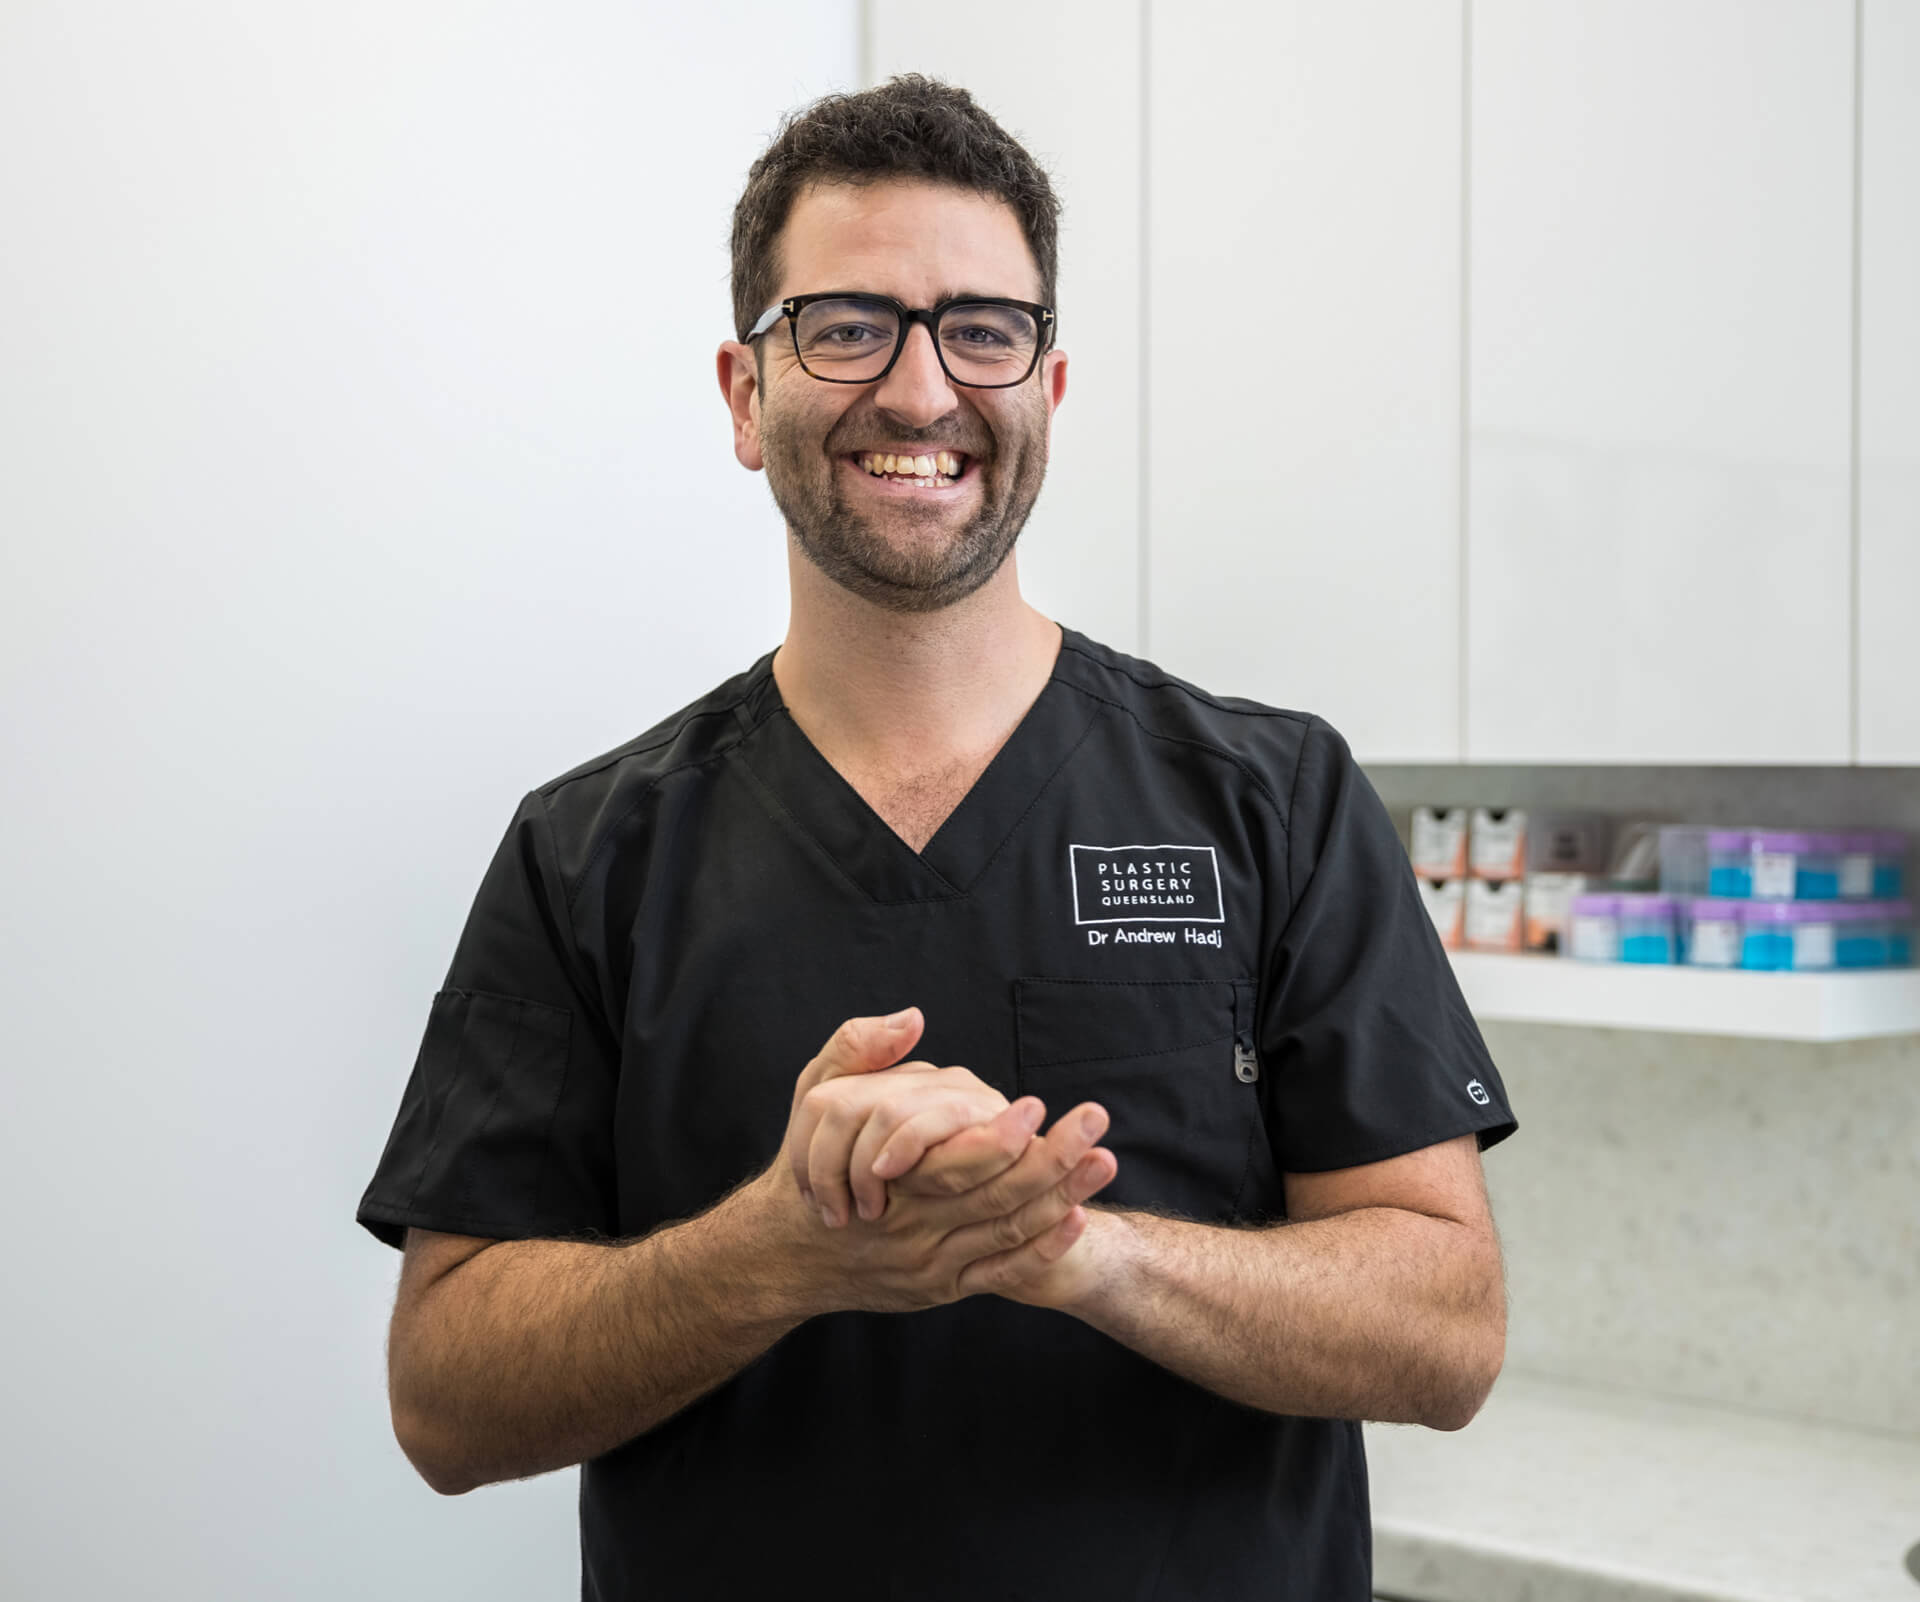 Queensland Orthopaedic hand surgery Dr Andrew Hadj, Hand Surgeon Brisbane and Gold Coast